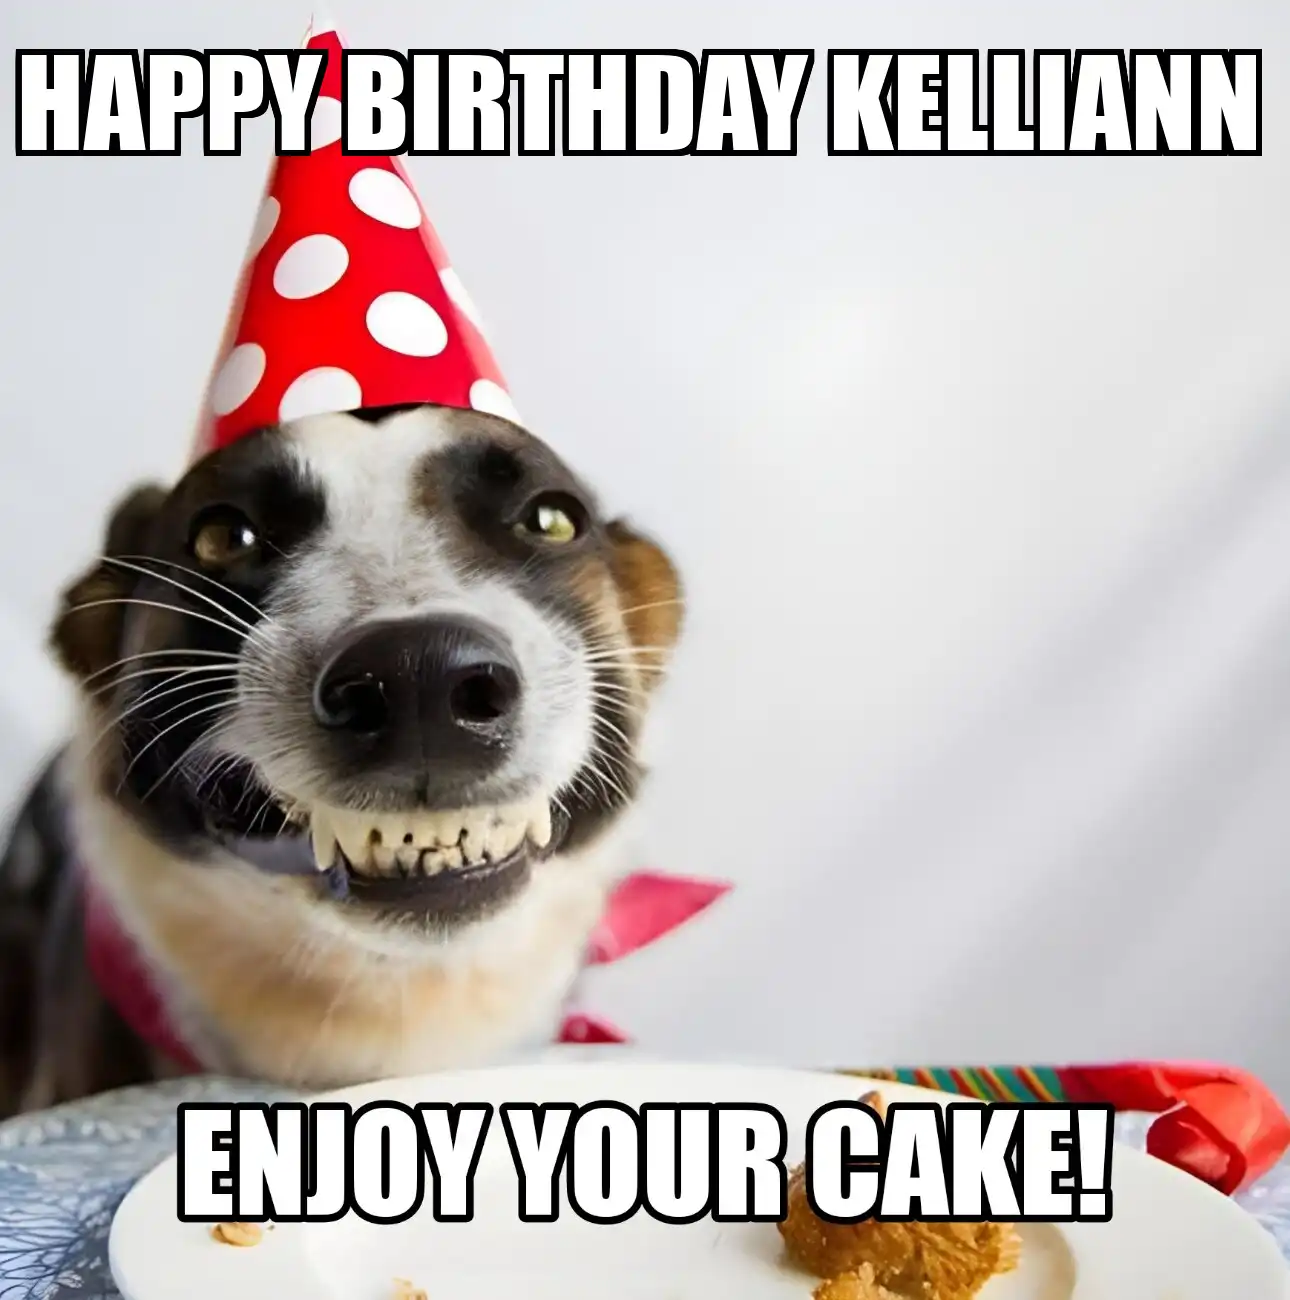 Happy Birthday Kelliann Enjoy Your Cake Dog Meme